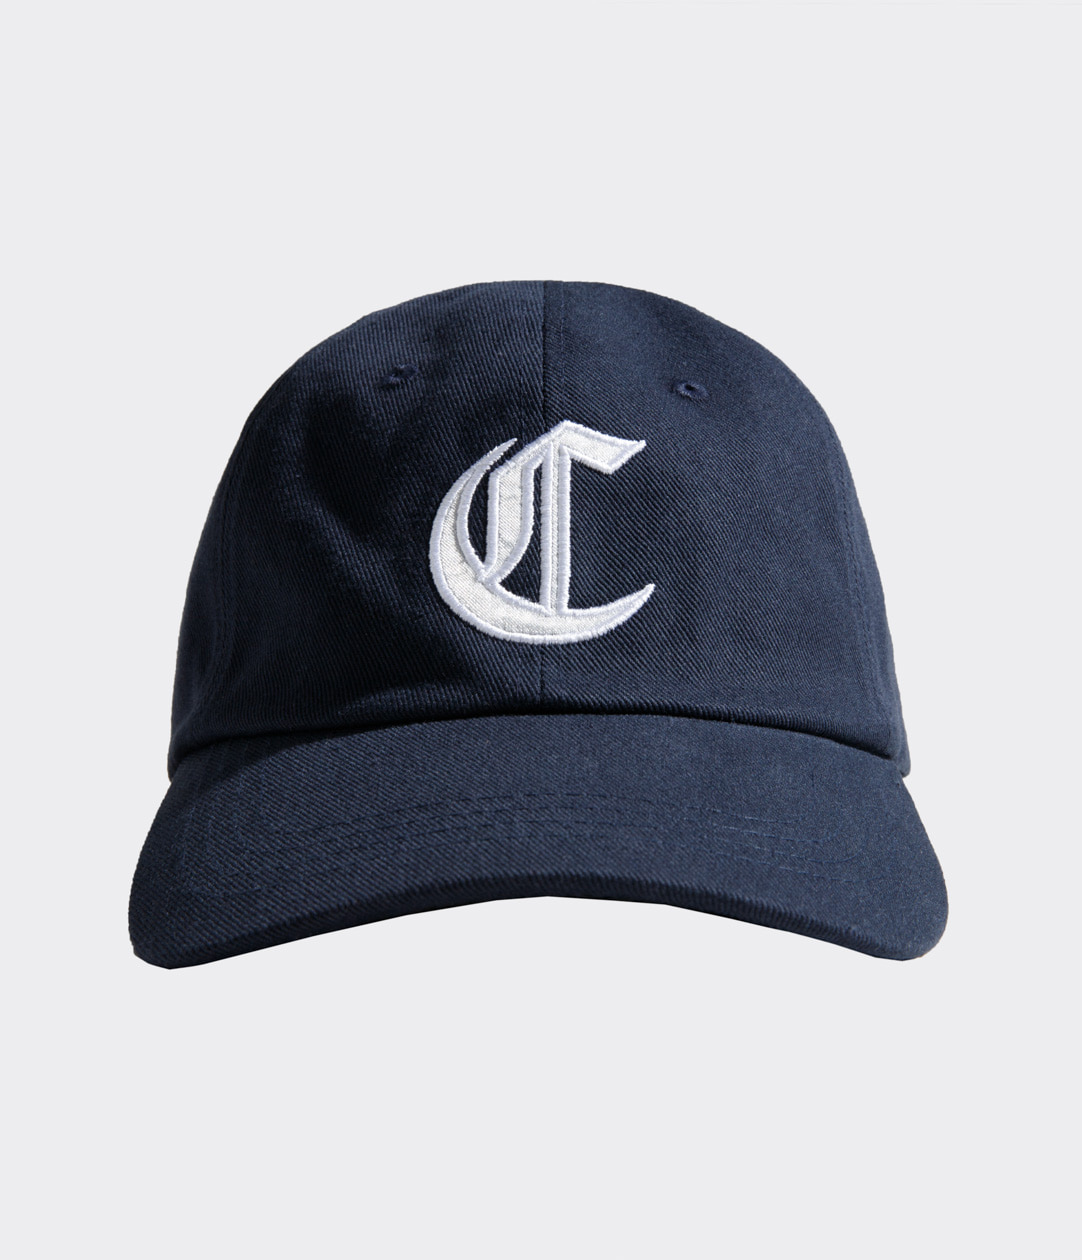 「Sportswear」Calico Baseball Cap (Blackletter ver.) / Dark Navy